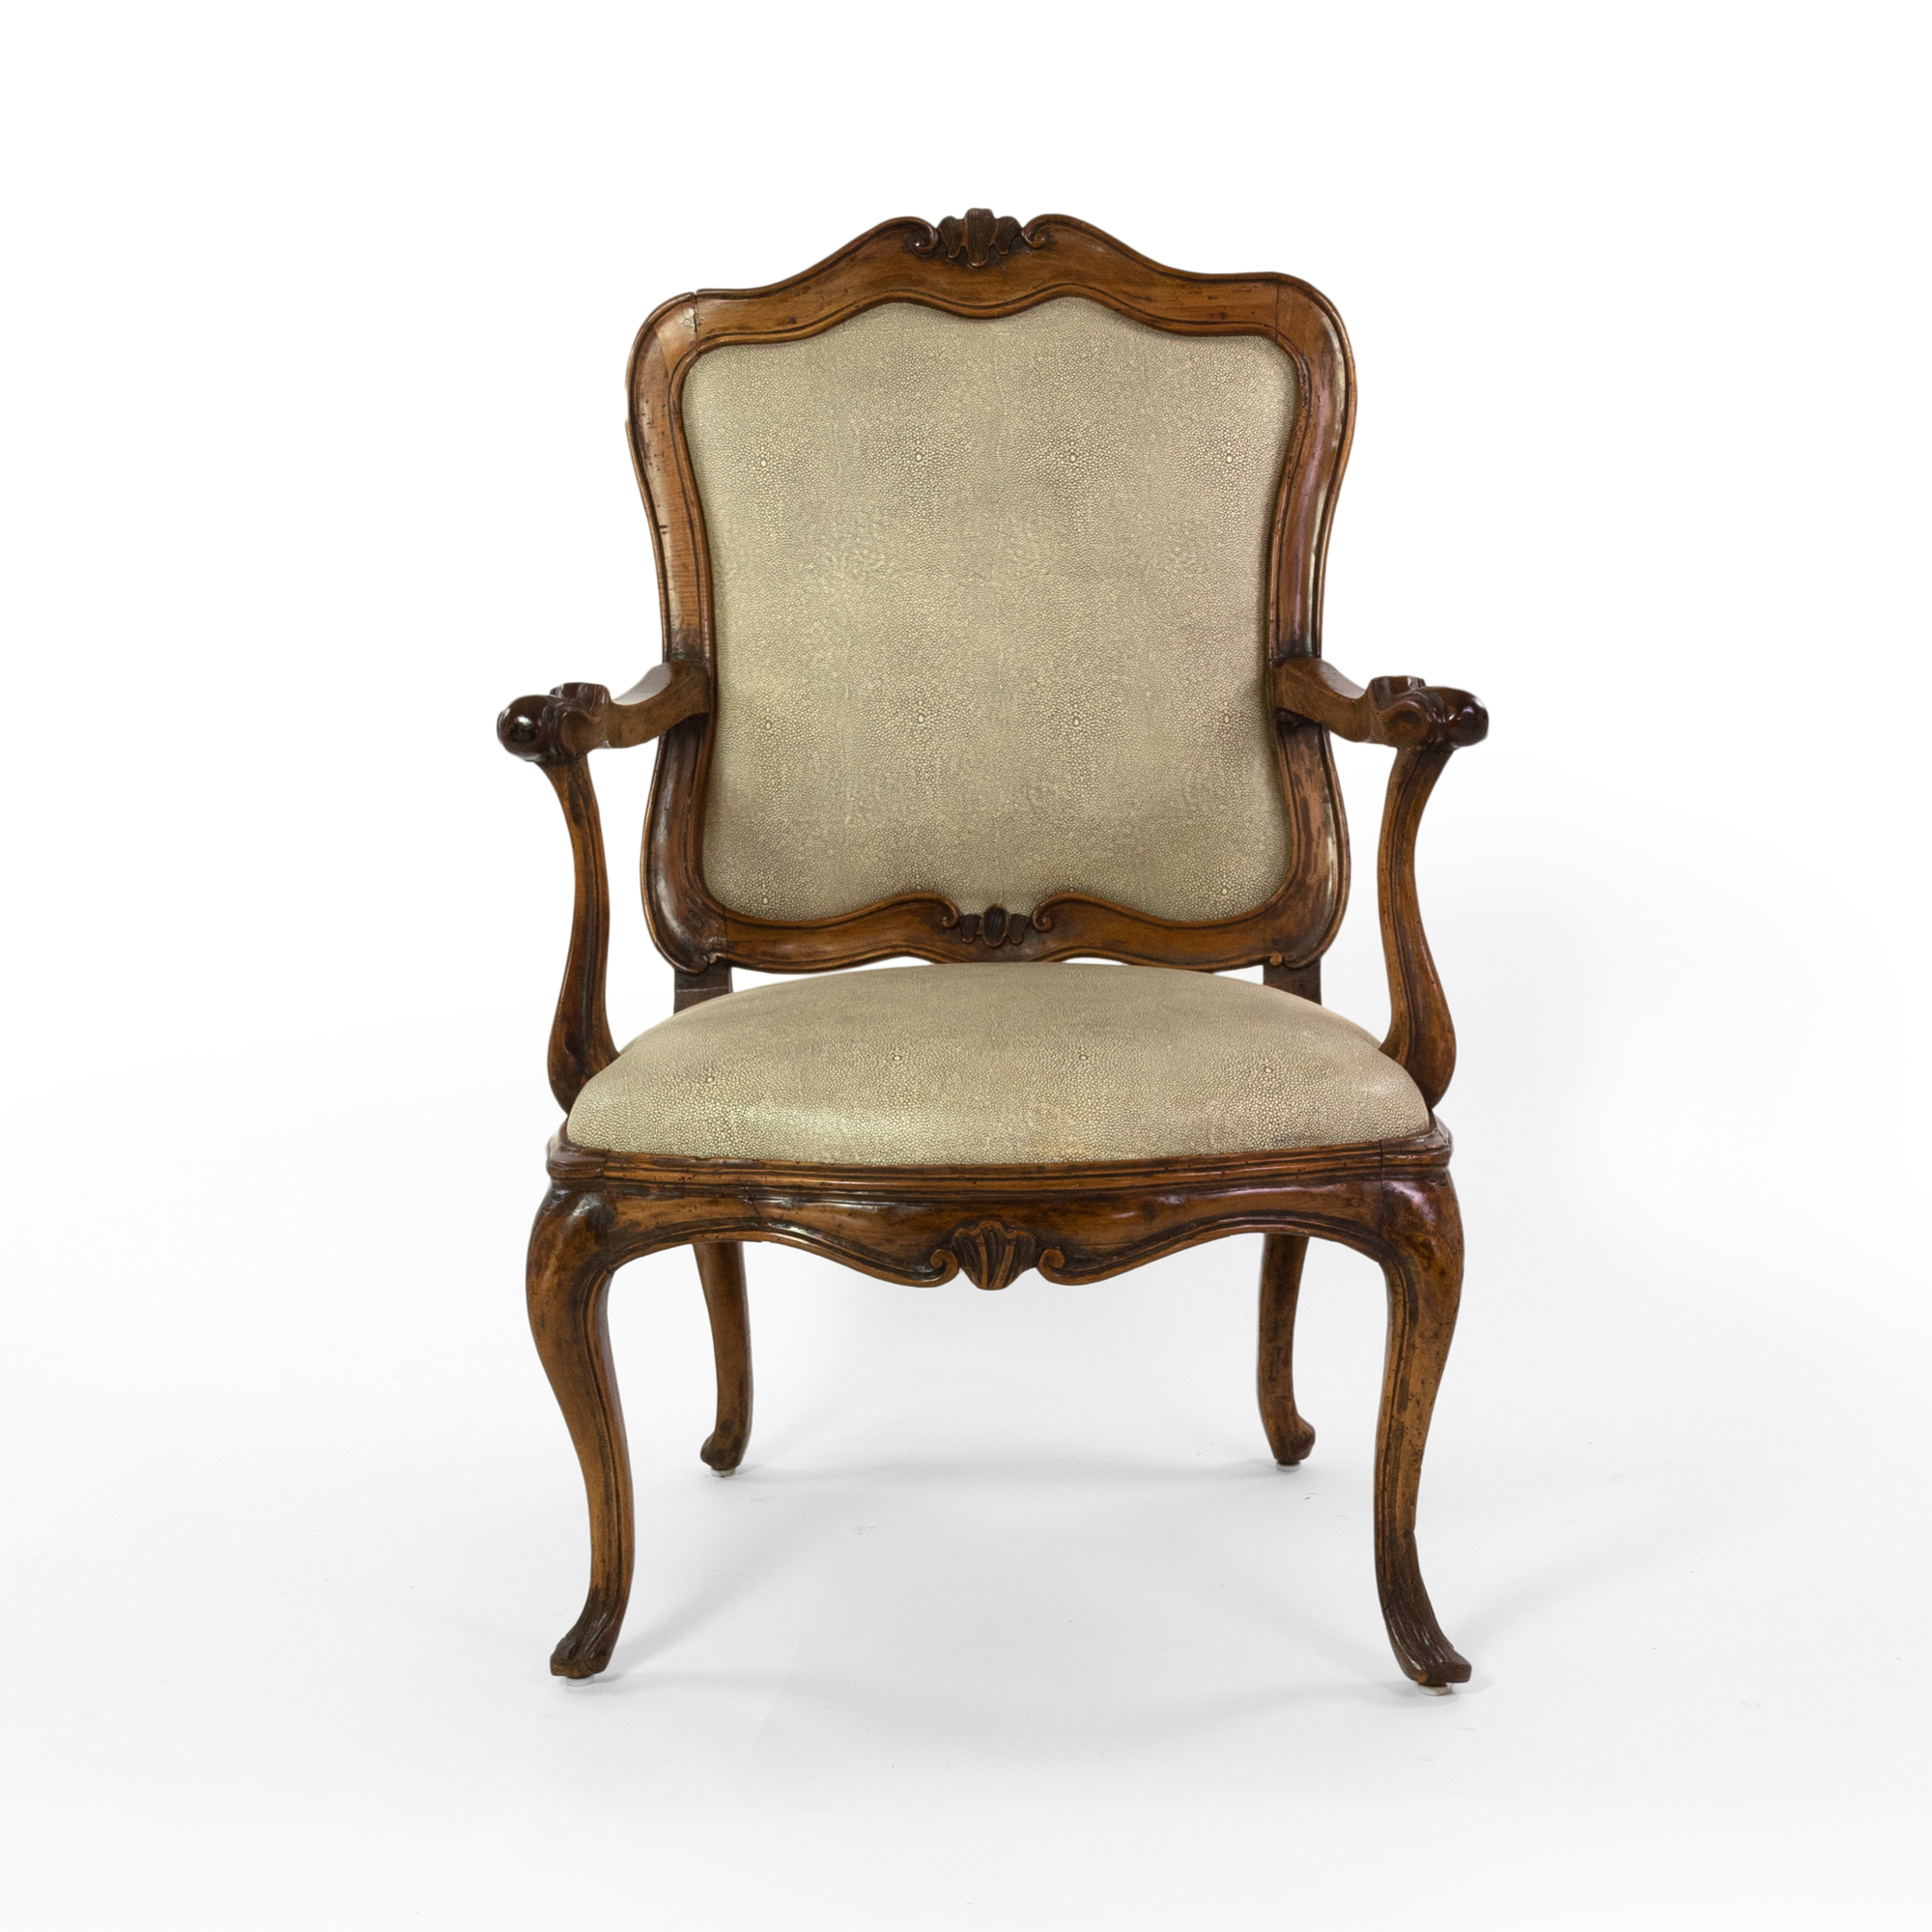 Louis XV Gilt Wood Chair with Green Silk - Alisanne Wonderland